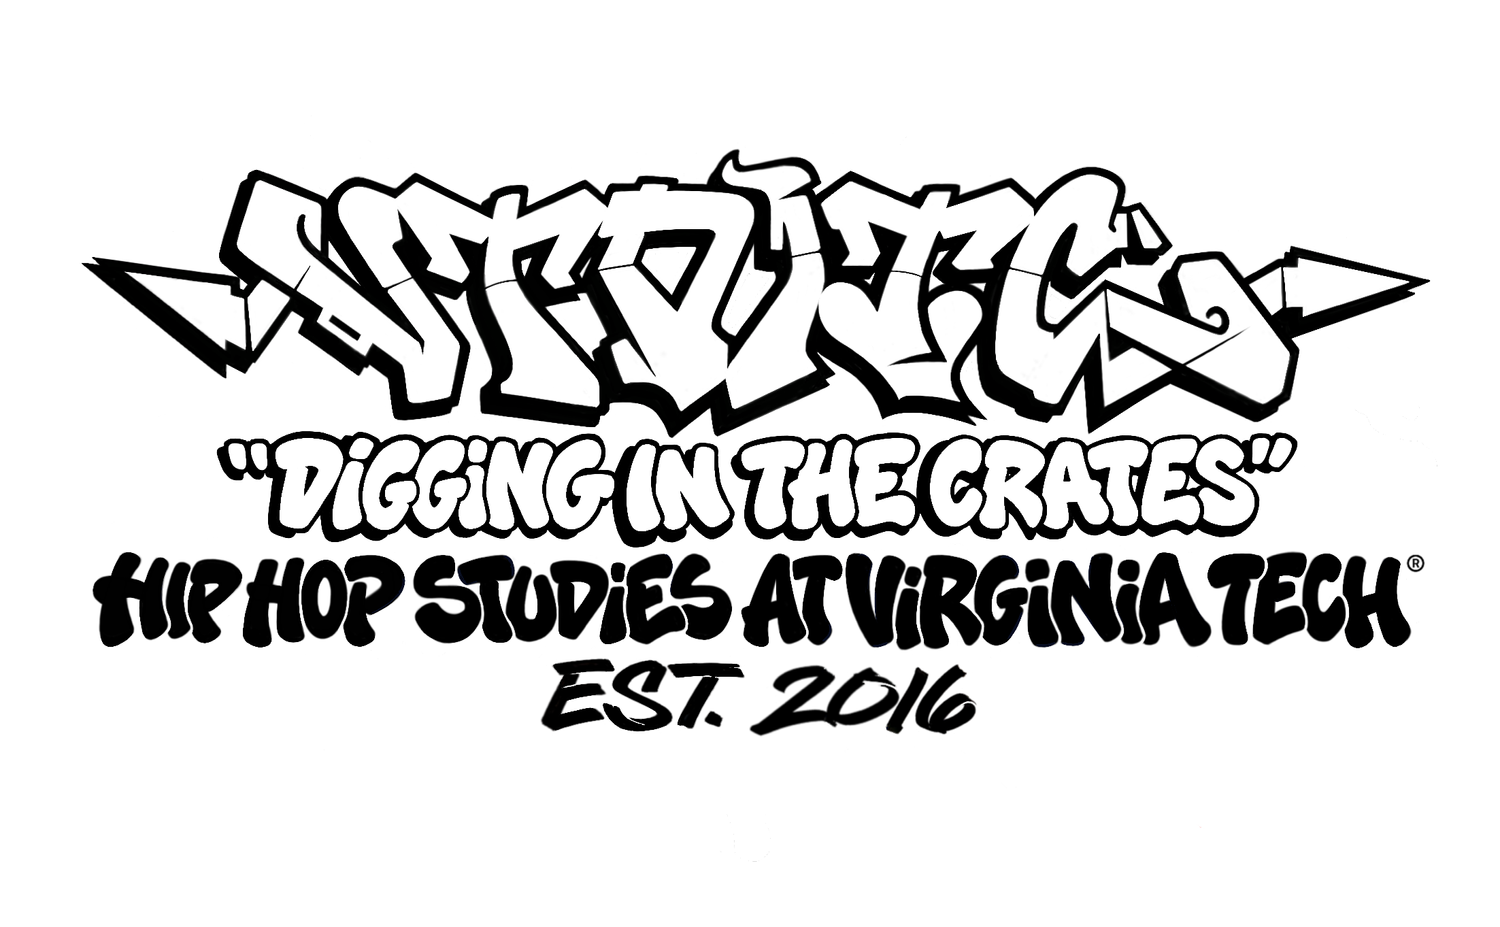 VTDITC: Hip Hop Studies